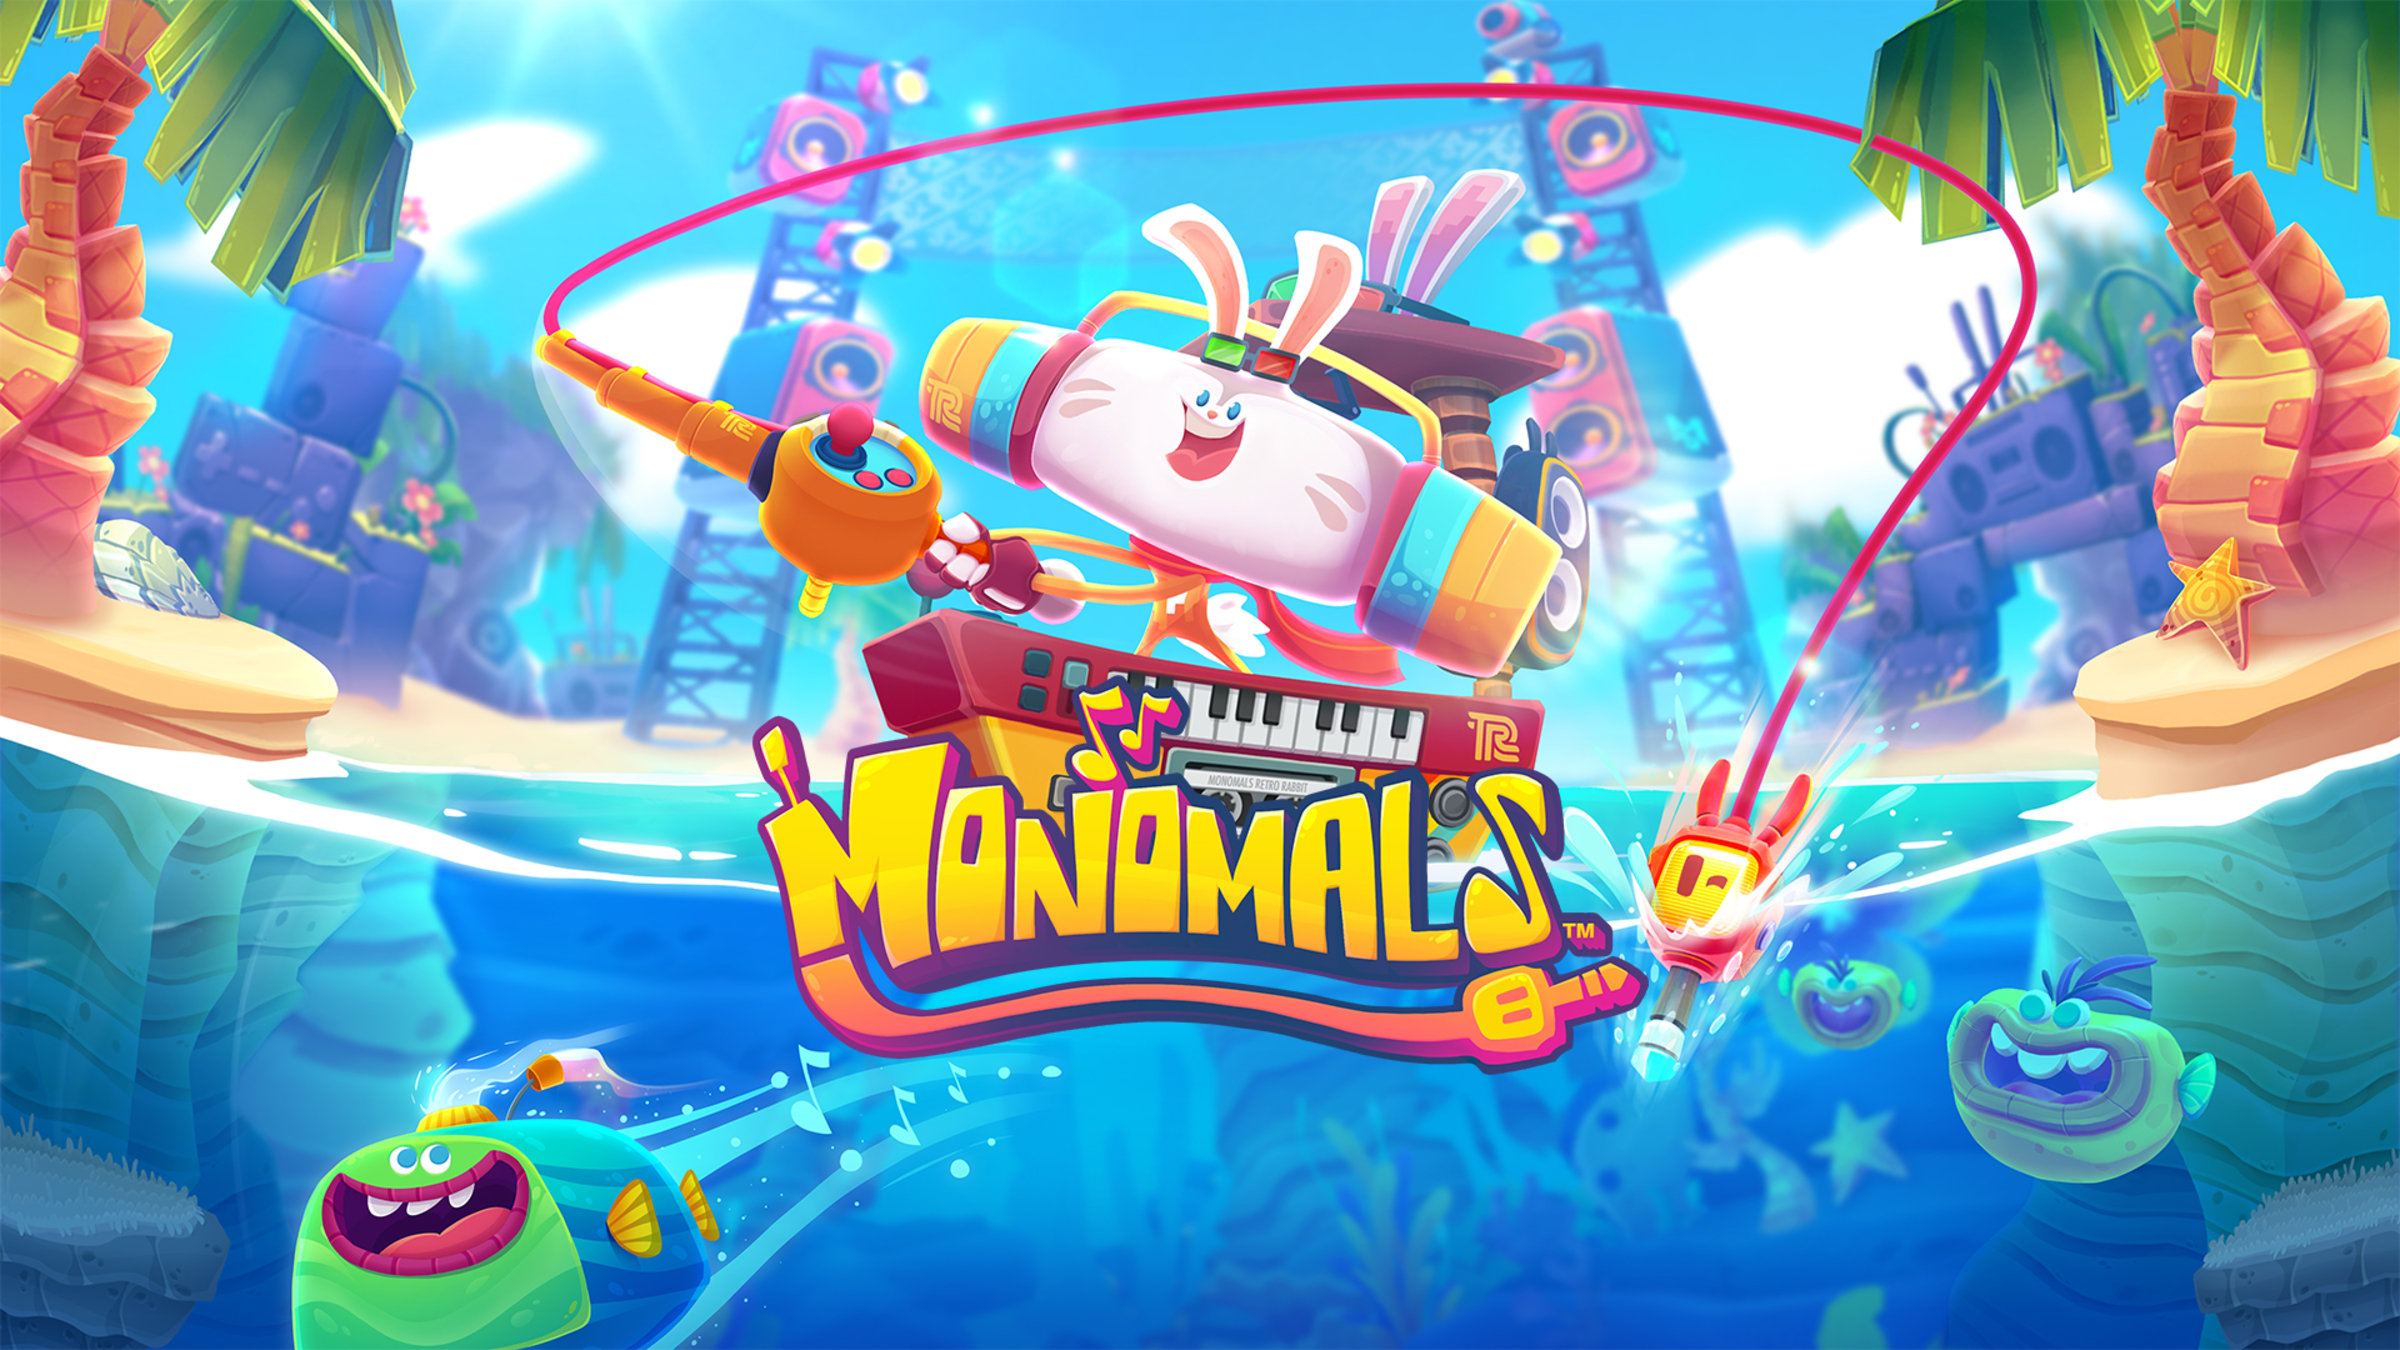 Monomals for Nintendo Switch - Nintendo Official Site